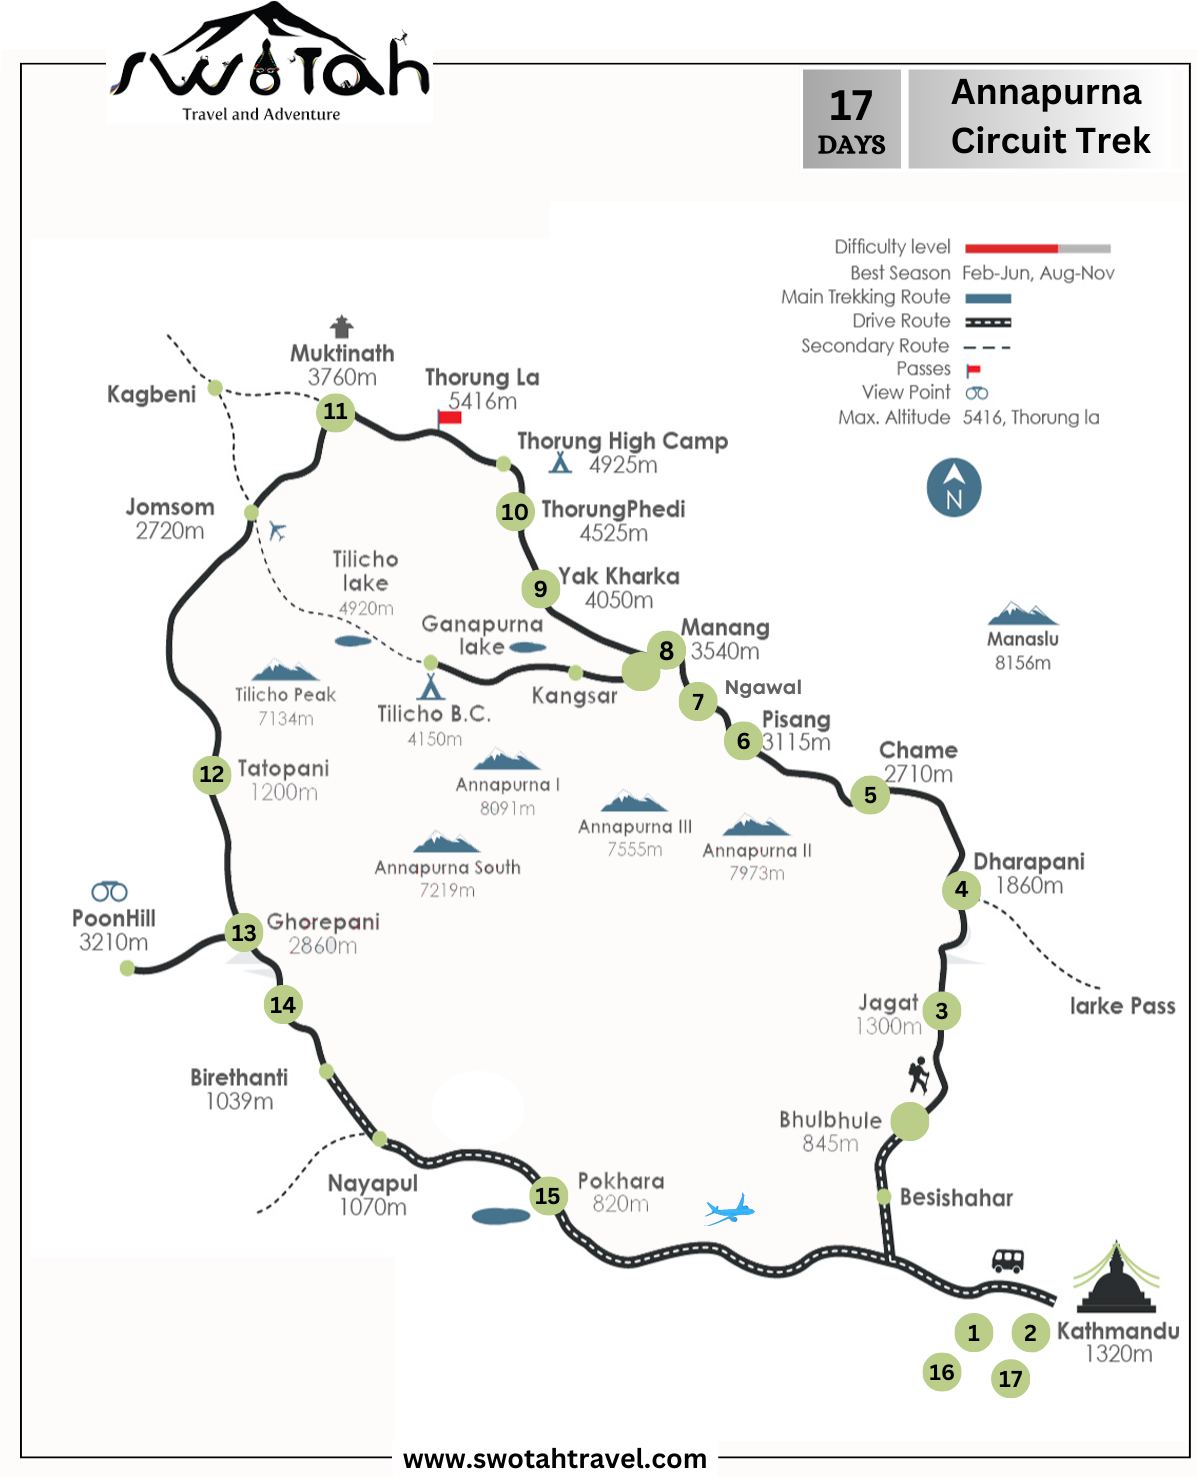 tourhub | Swotah Travel and Adventure | ANNAPURNA CIRCUIT TREK | 17ACT | Route Map